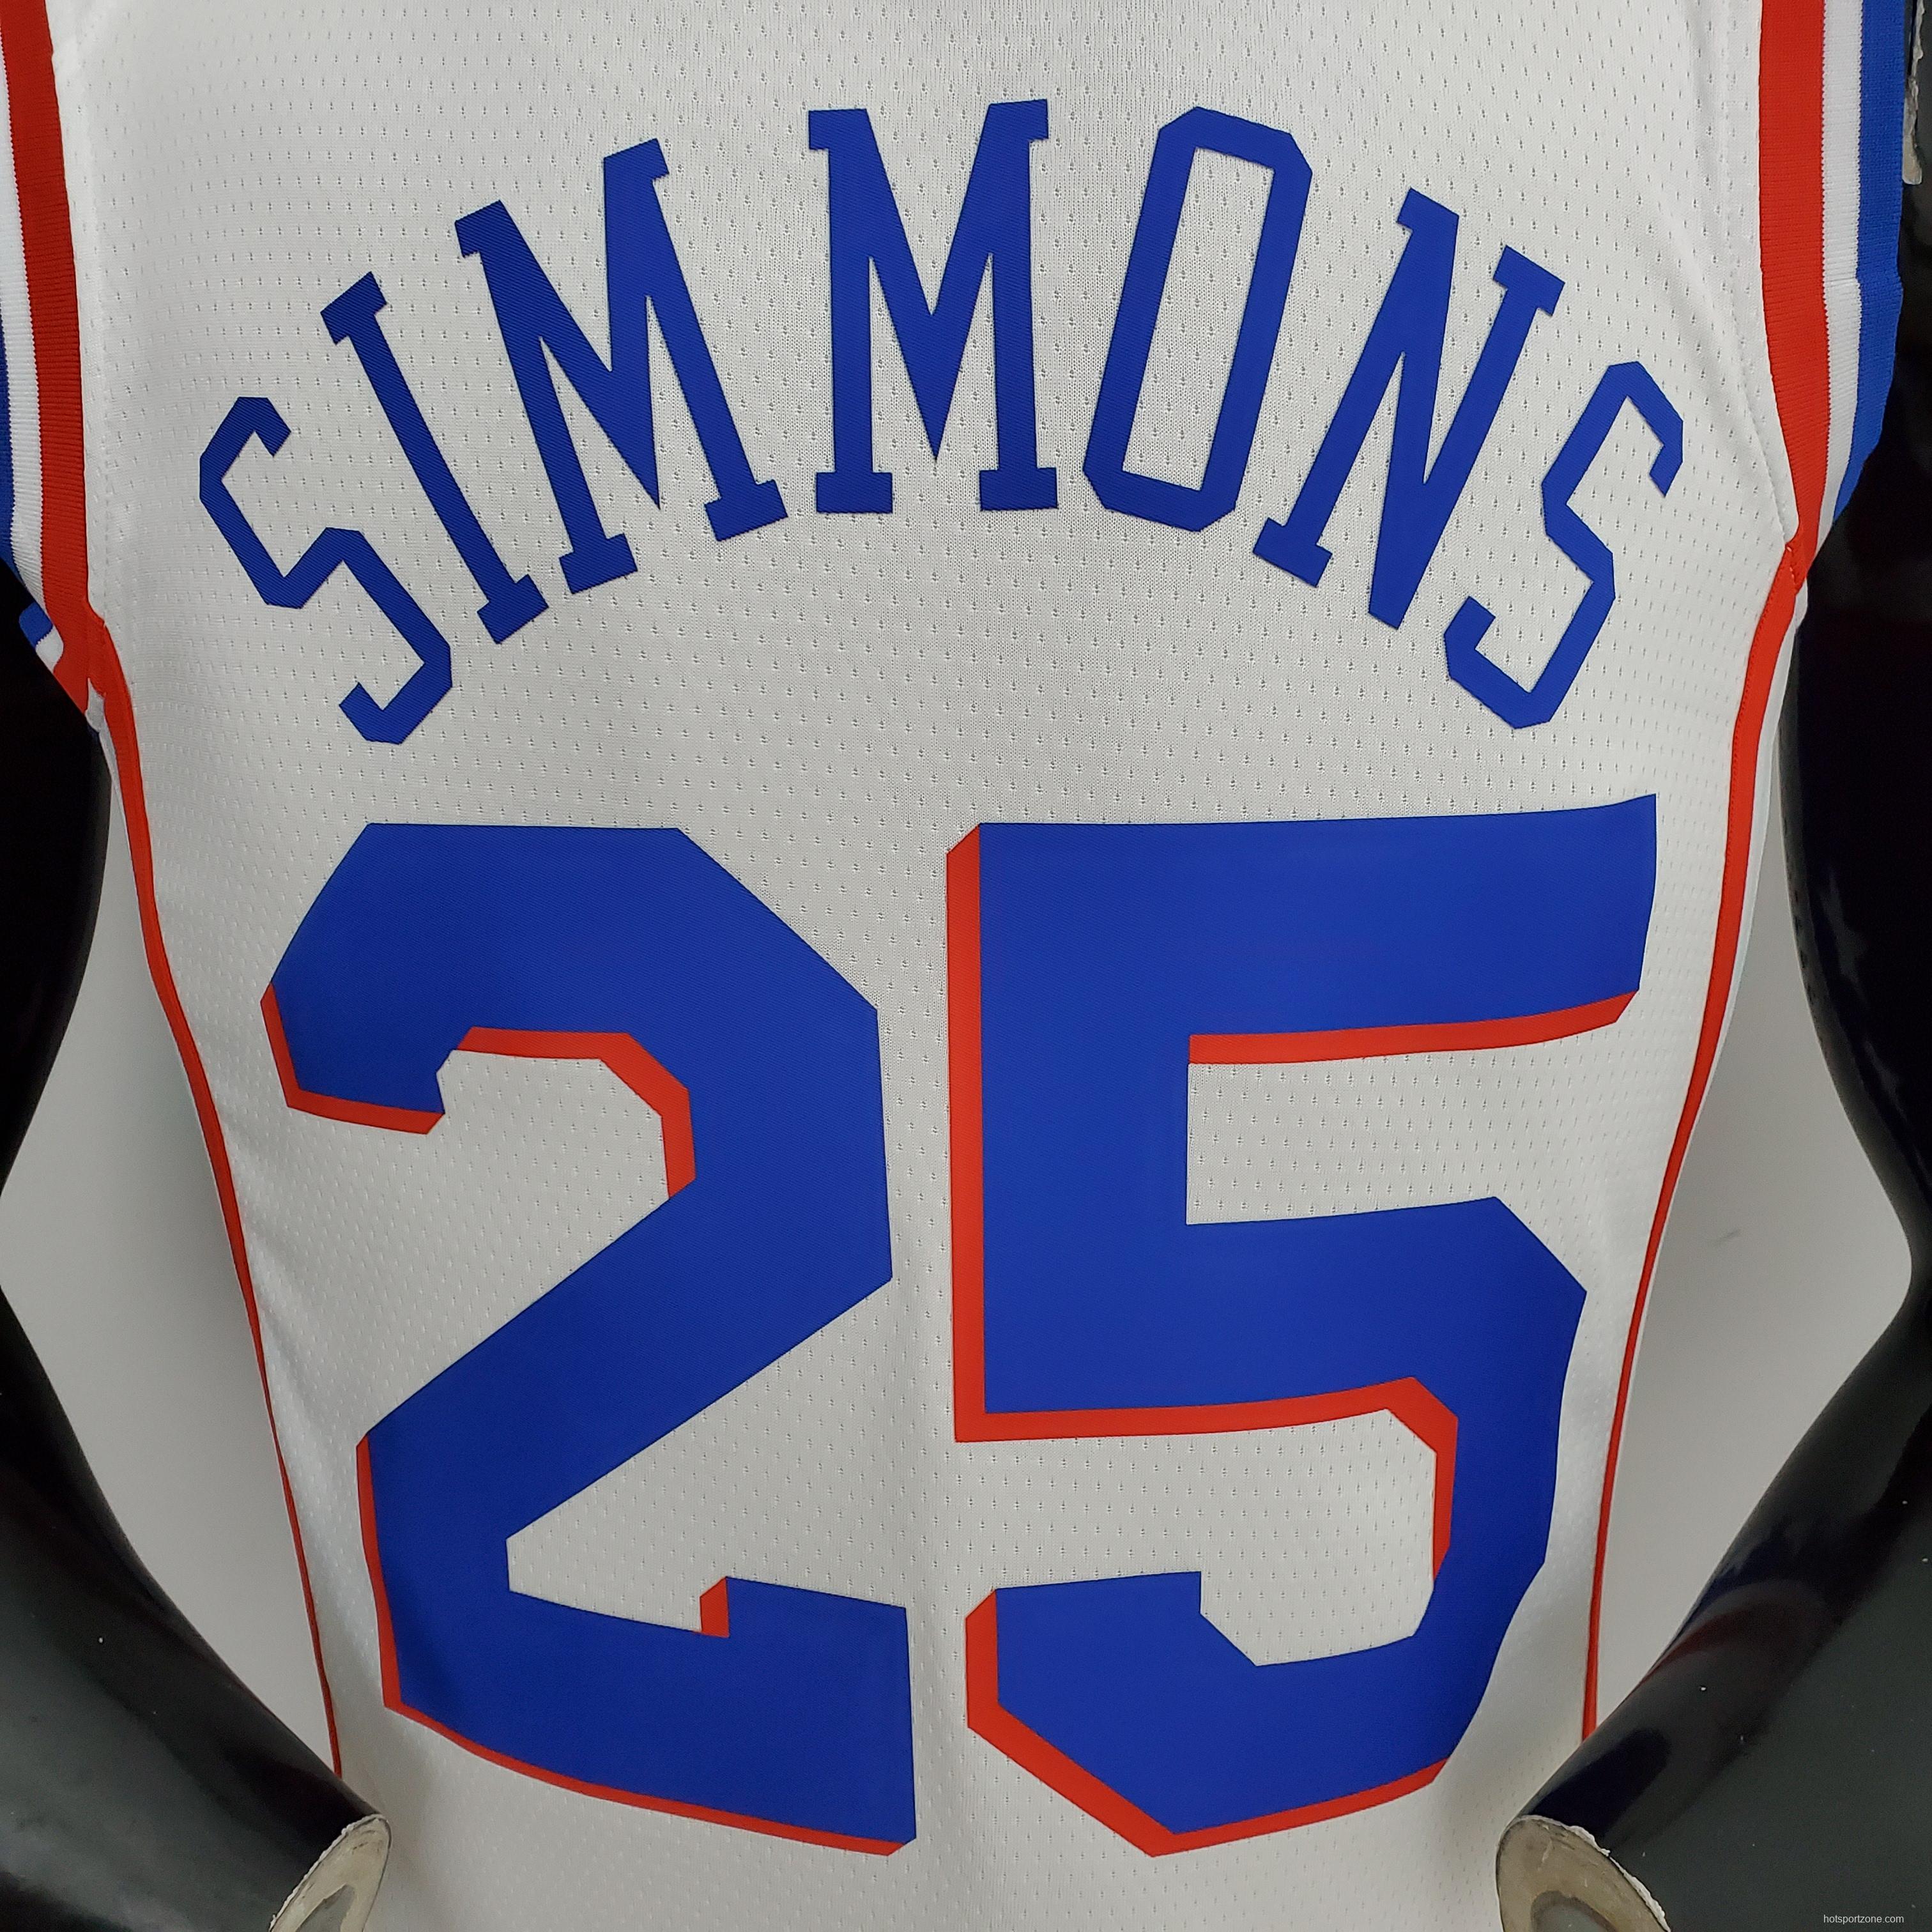 75th Anniversary Philadelphia 76ers SIMMONS#25 White NBA Jersey